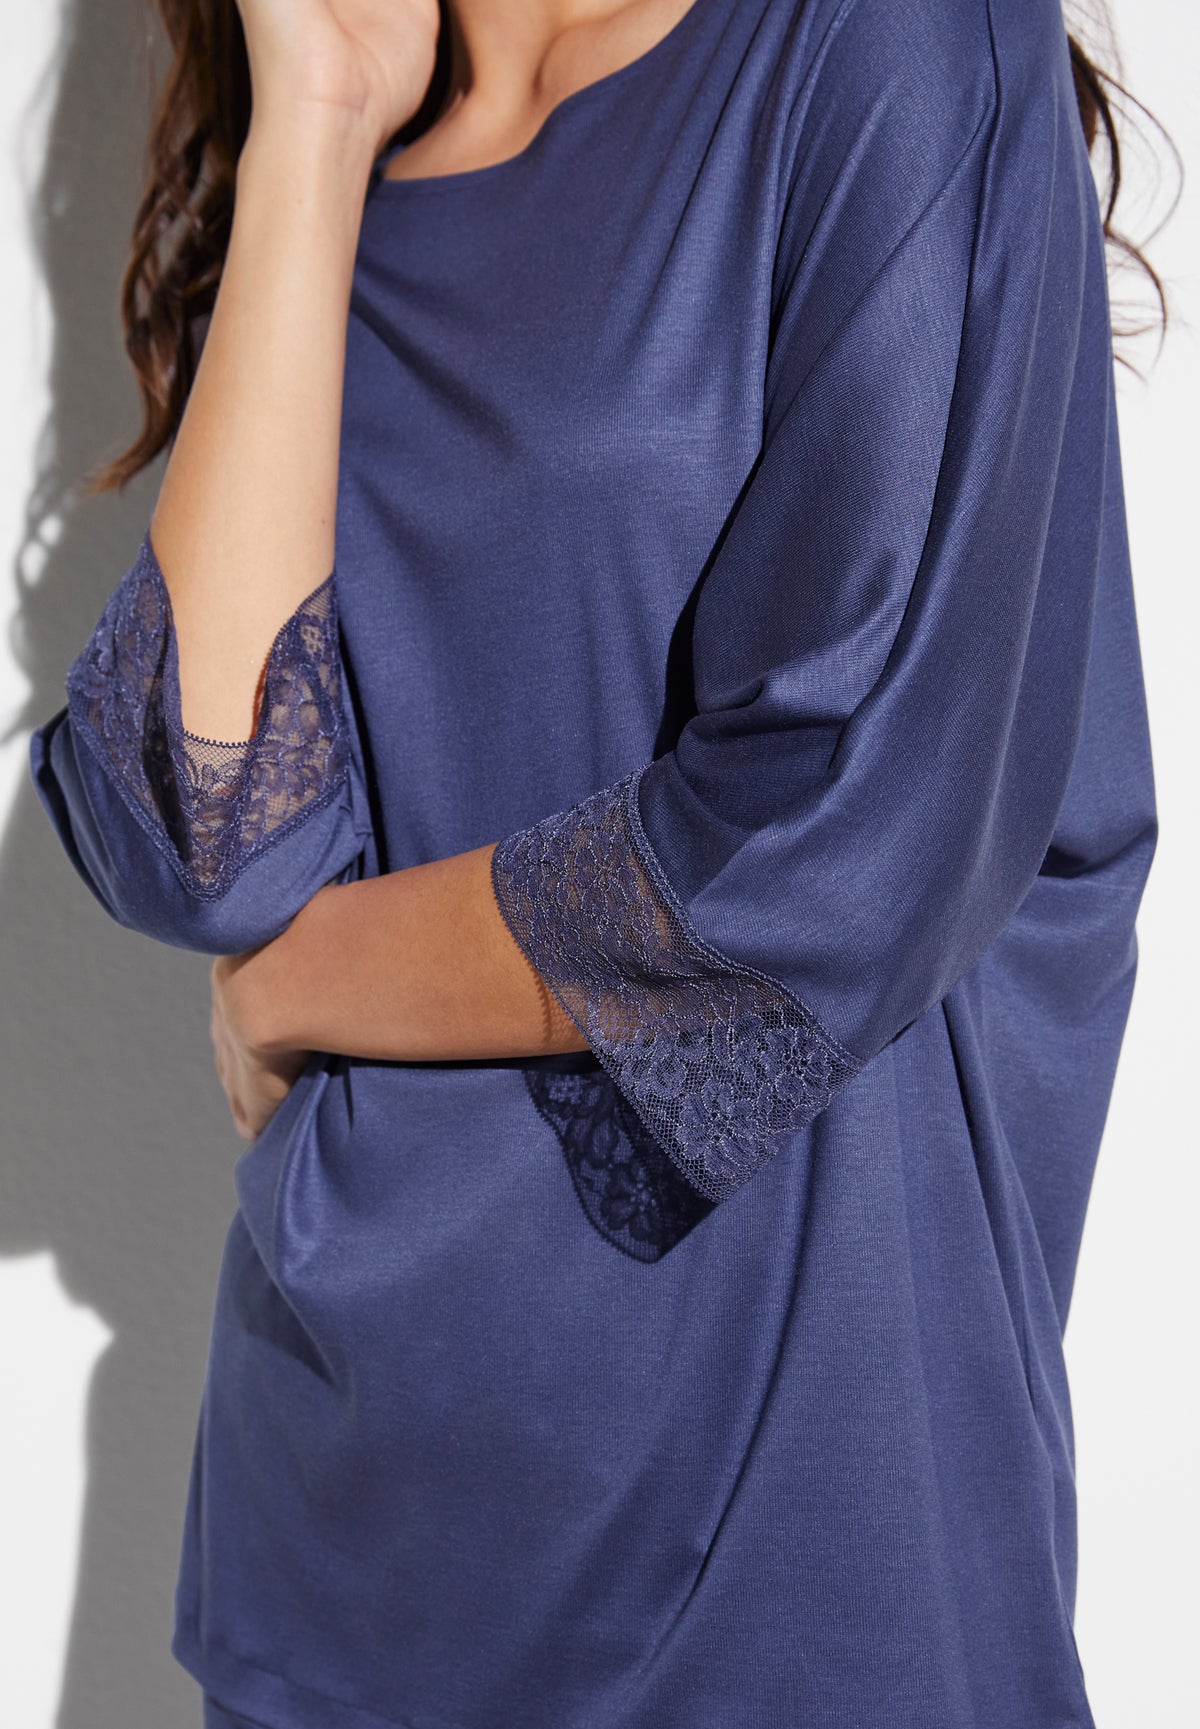 Silk Dreams | Pyjama Long 3/4 Sleeve - iris blue